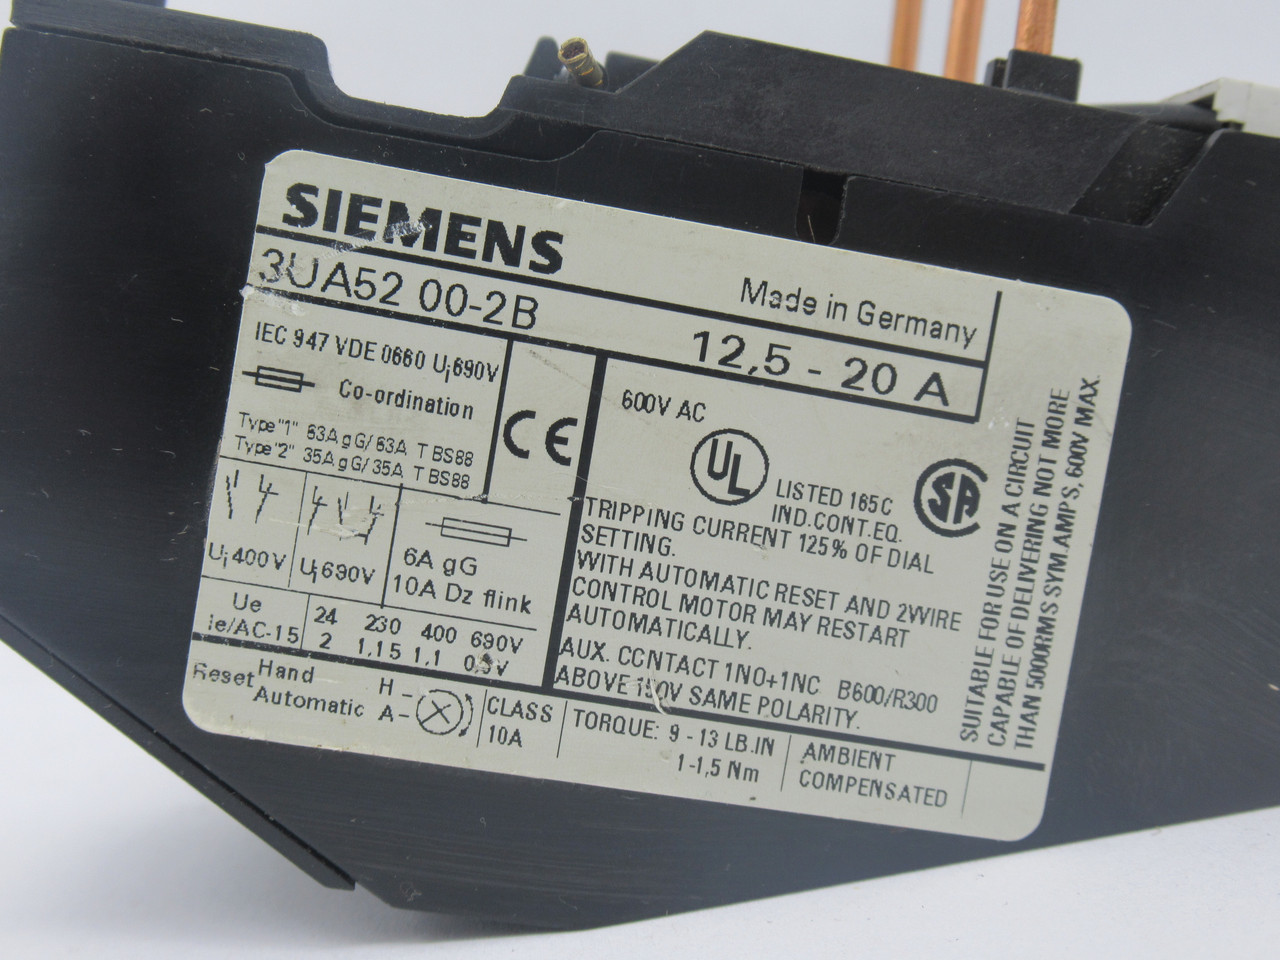 Siemens 3UA5200-2B Overload Relay 12.5-20A 600VAC USED